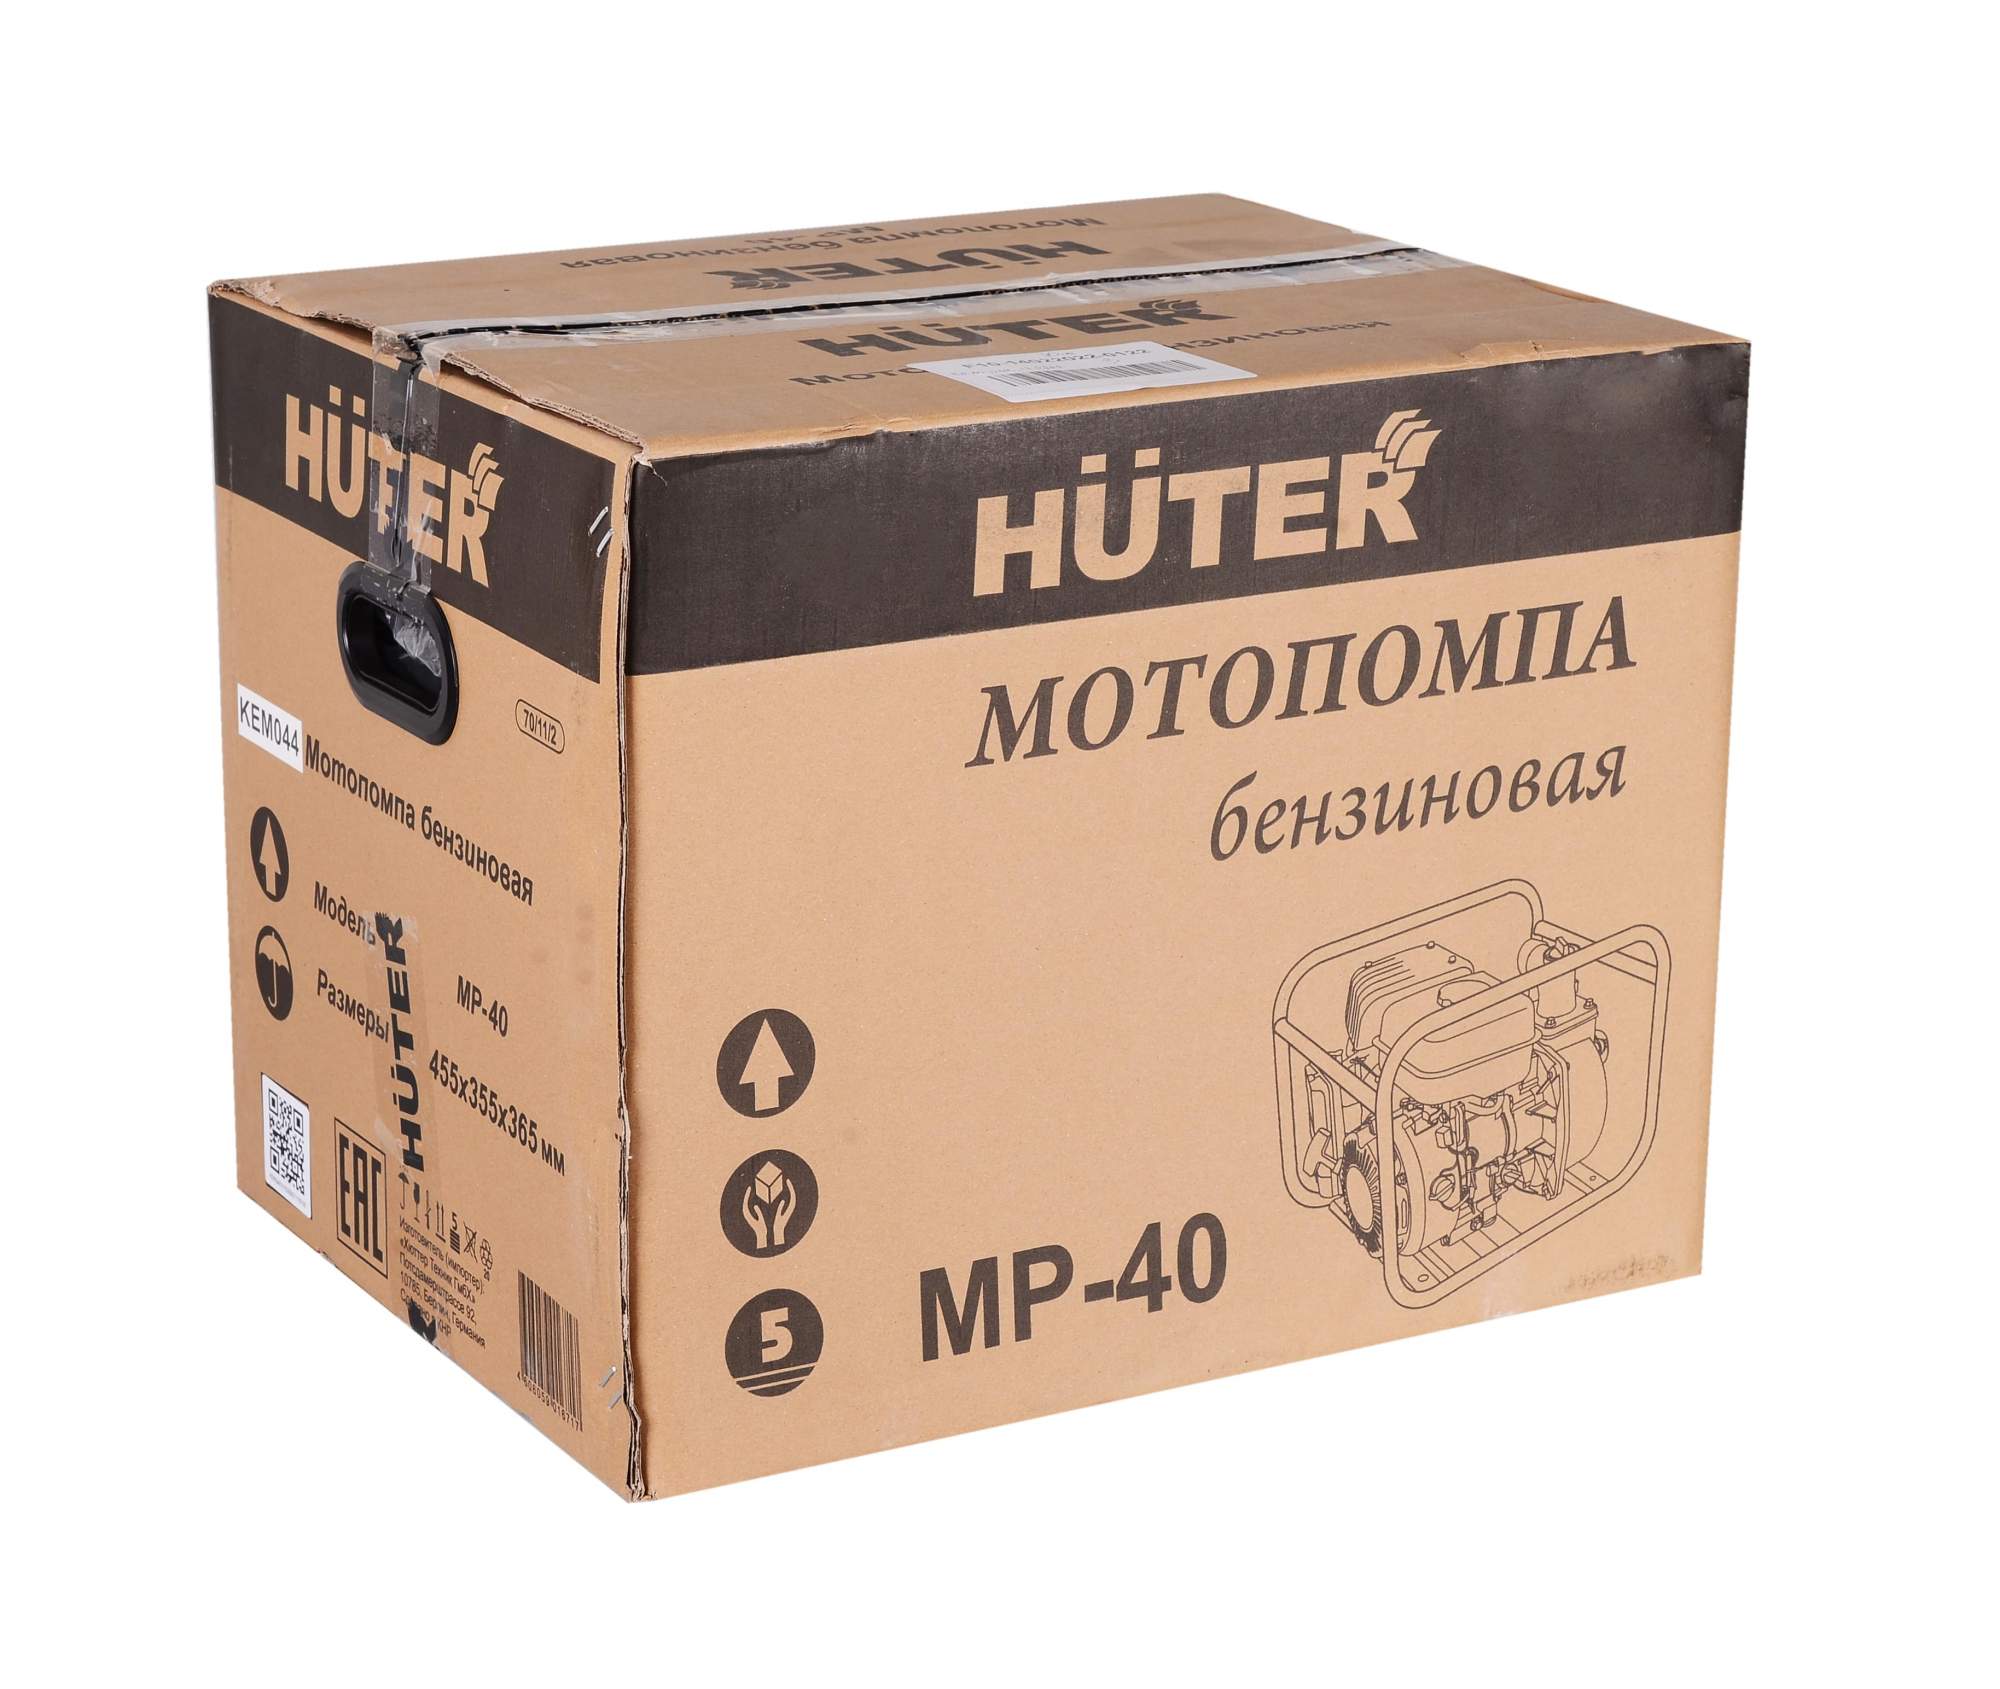 Бензиновая мотопомпа HUTER MP-40 - характеристики и описание на Мегамаркет